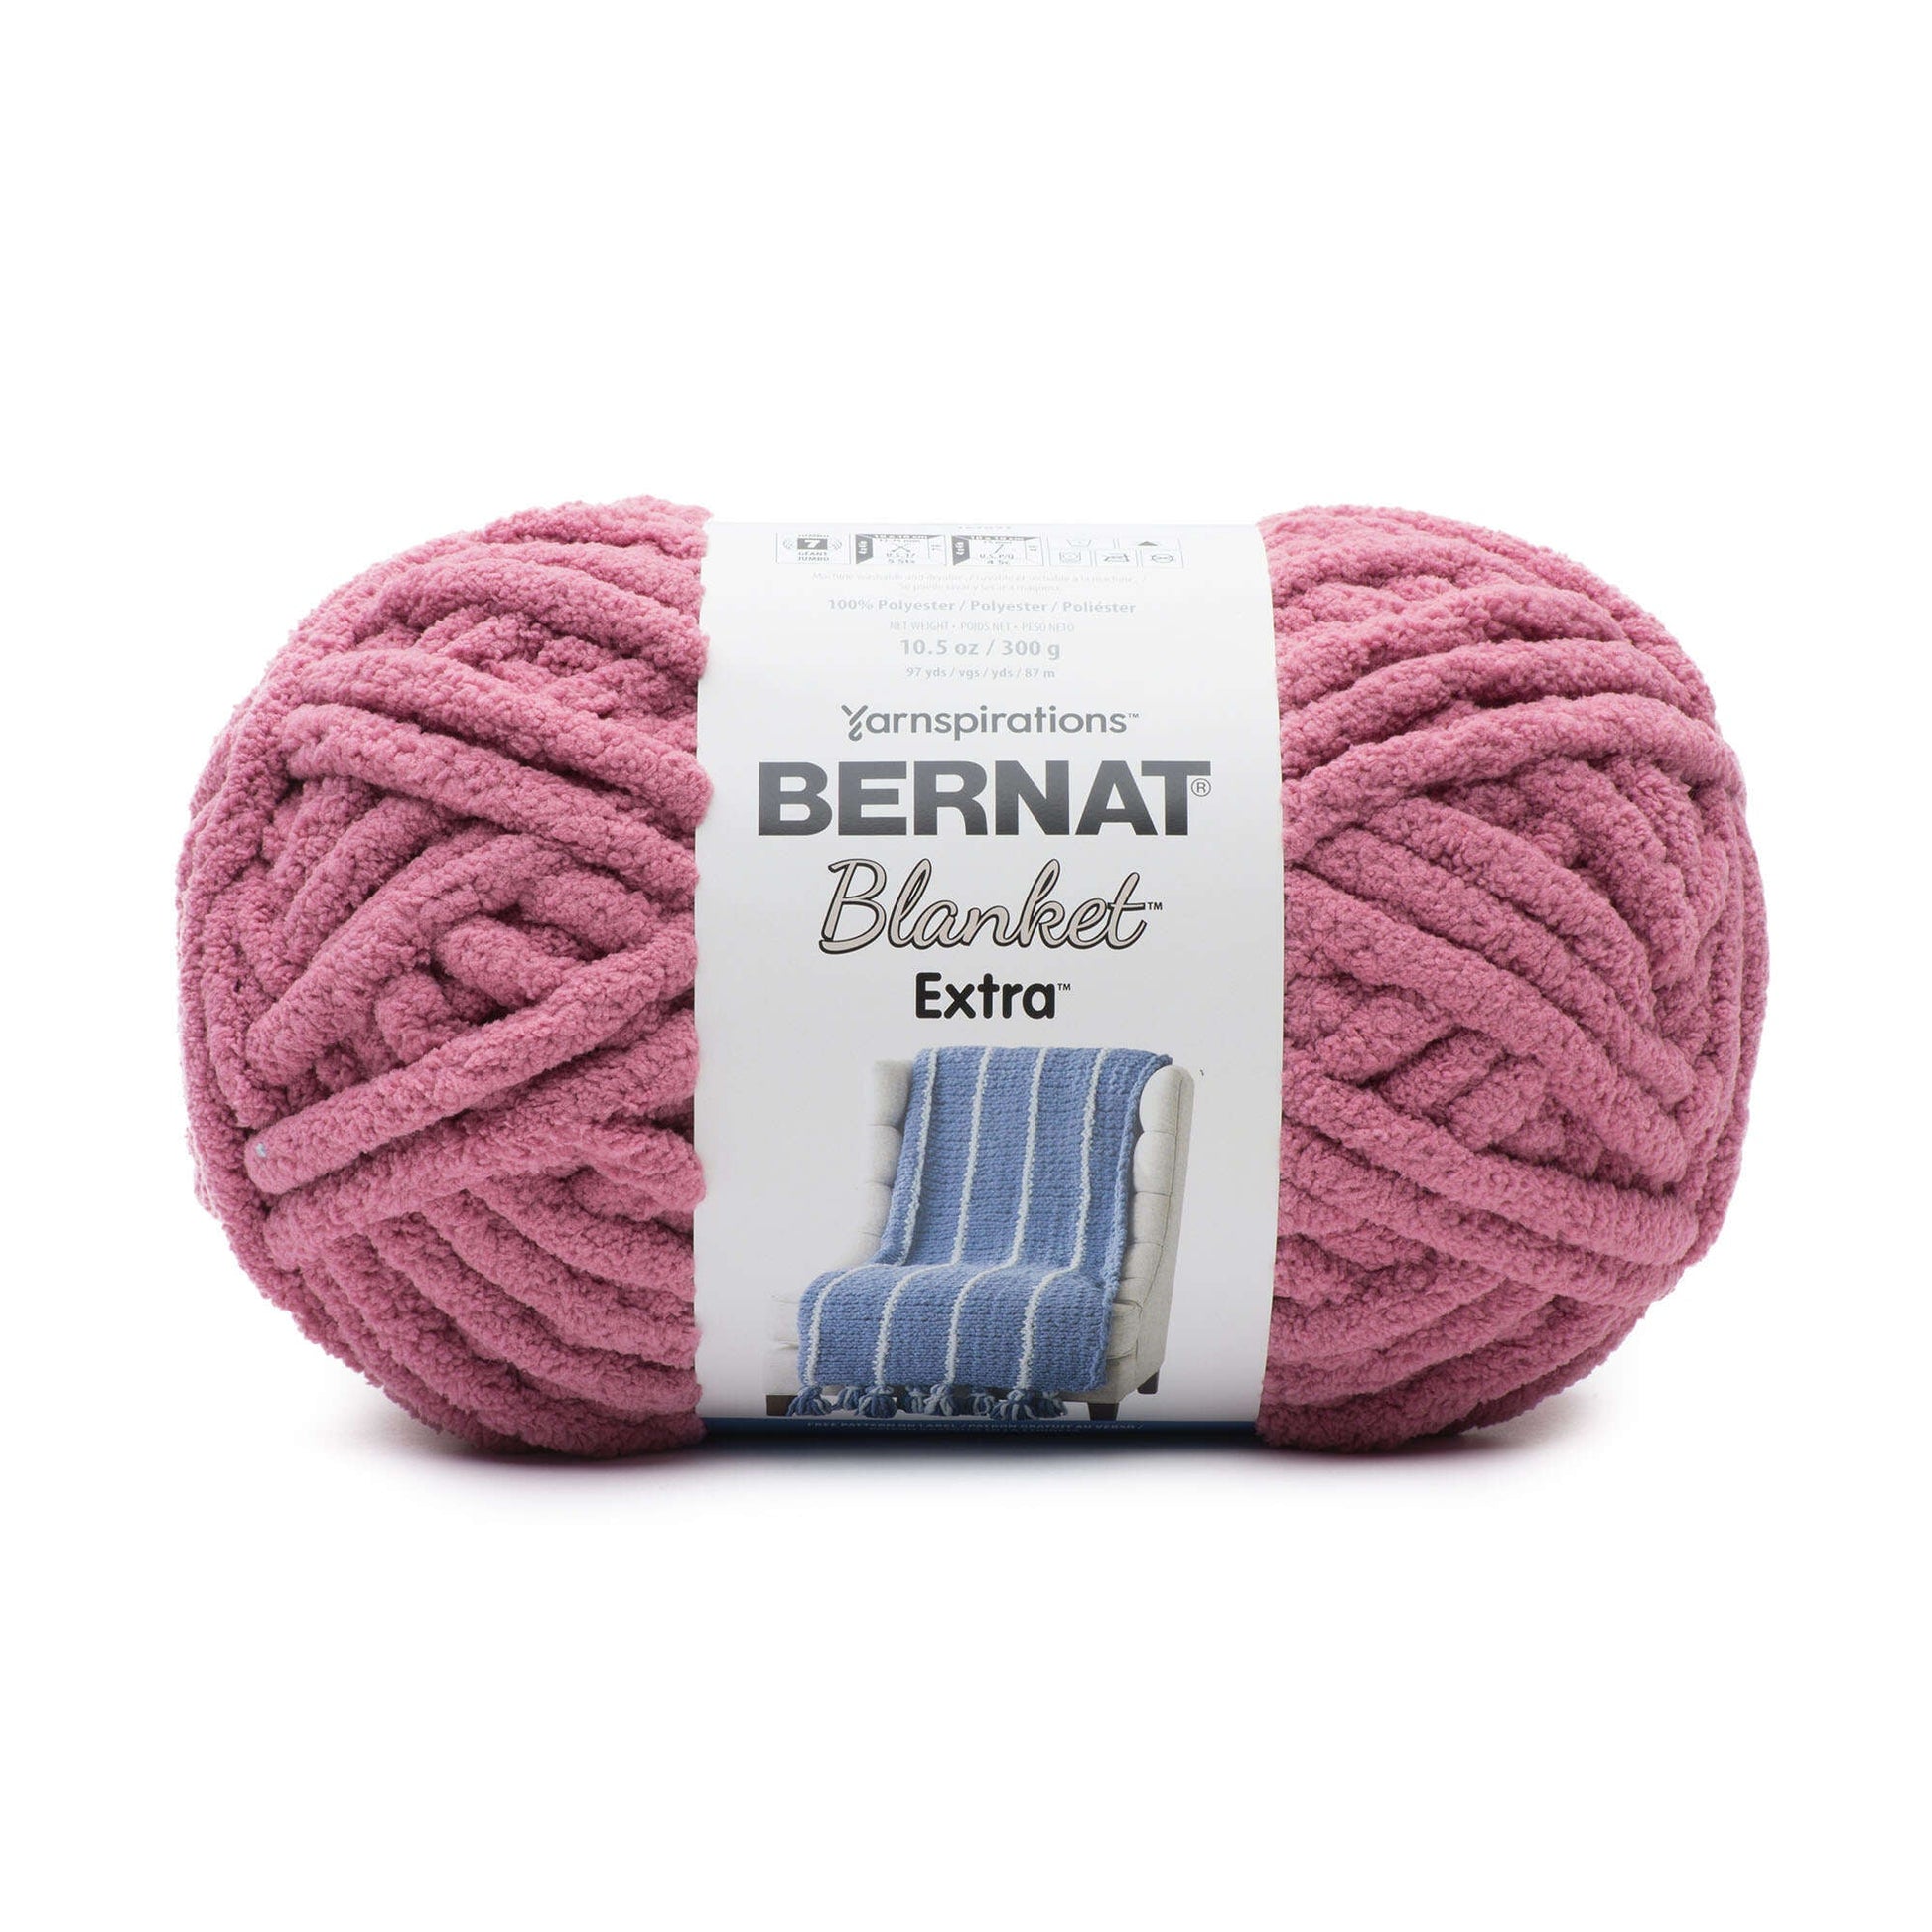 Bernat Blanket Extra Yarn (300g/10.5oz) - Clearance Shades* Burnt Rose